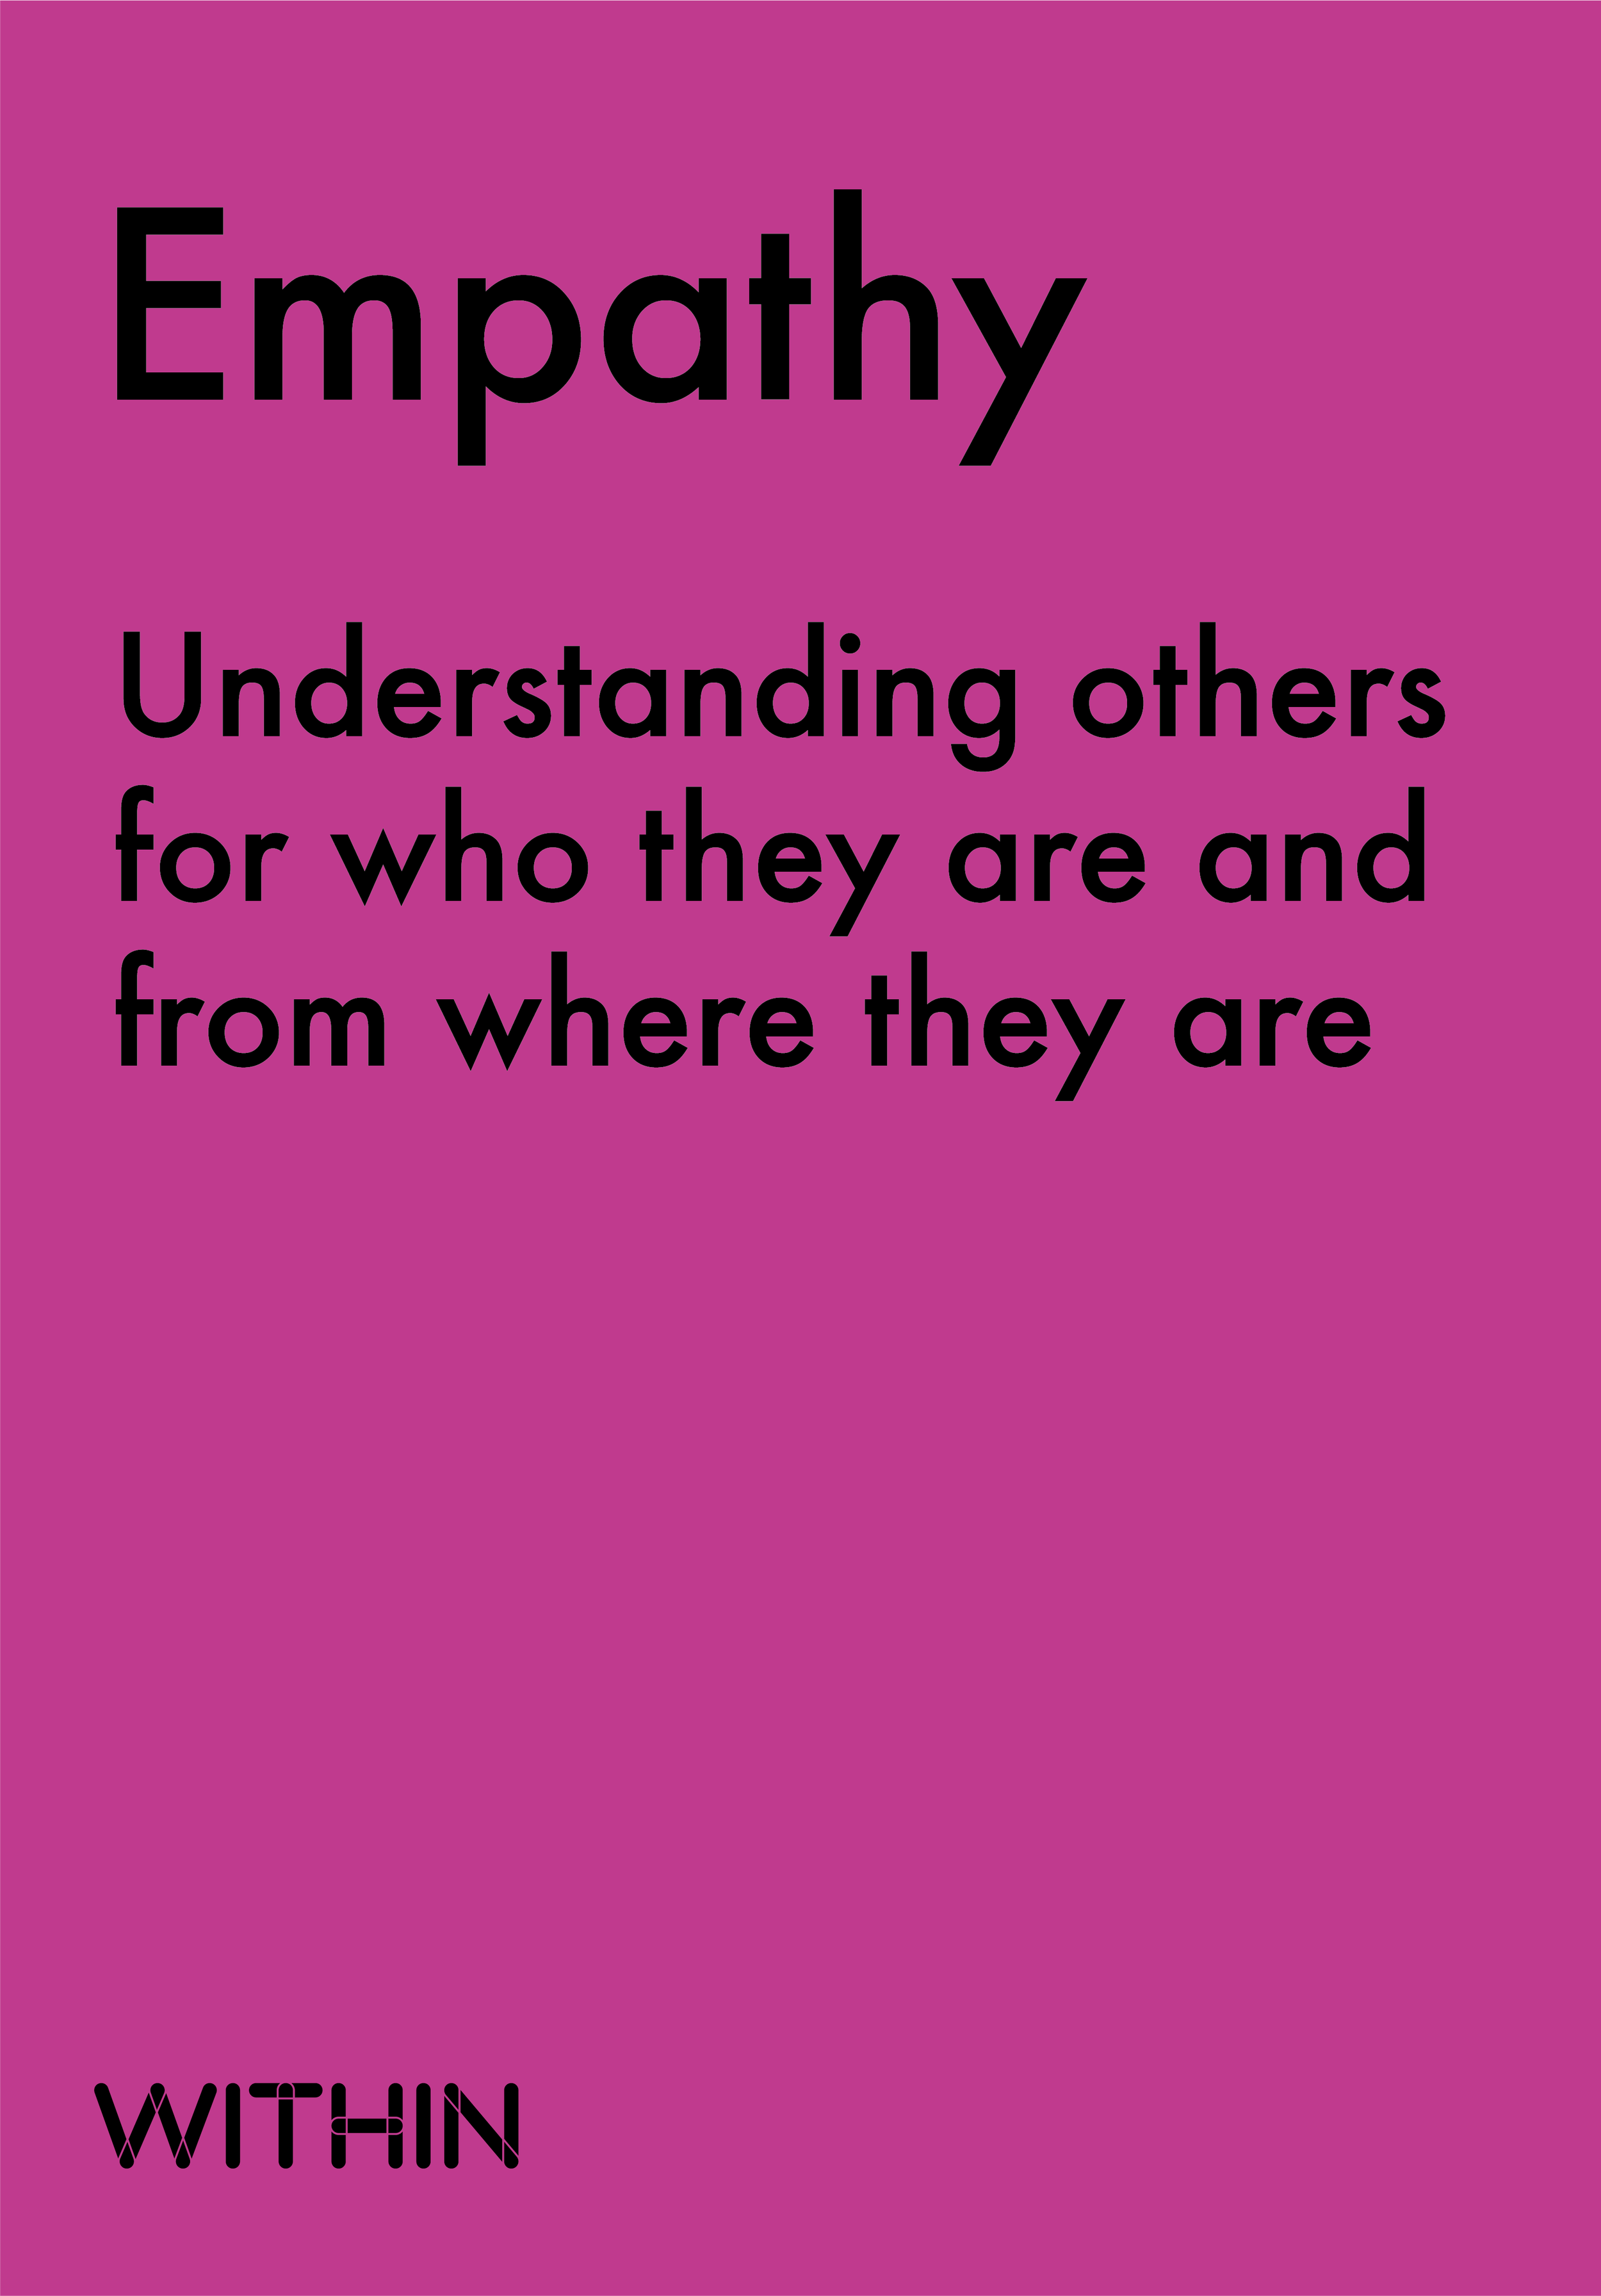 Human-Centred Leadership Values 5 Empathy